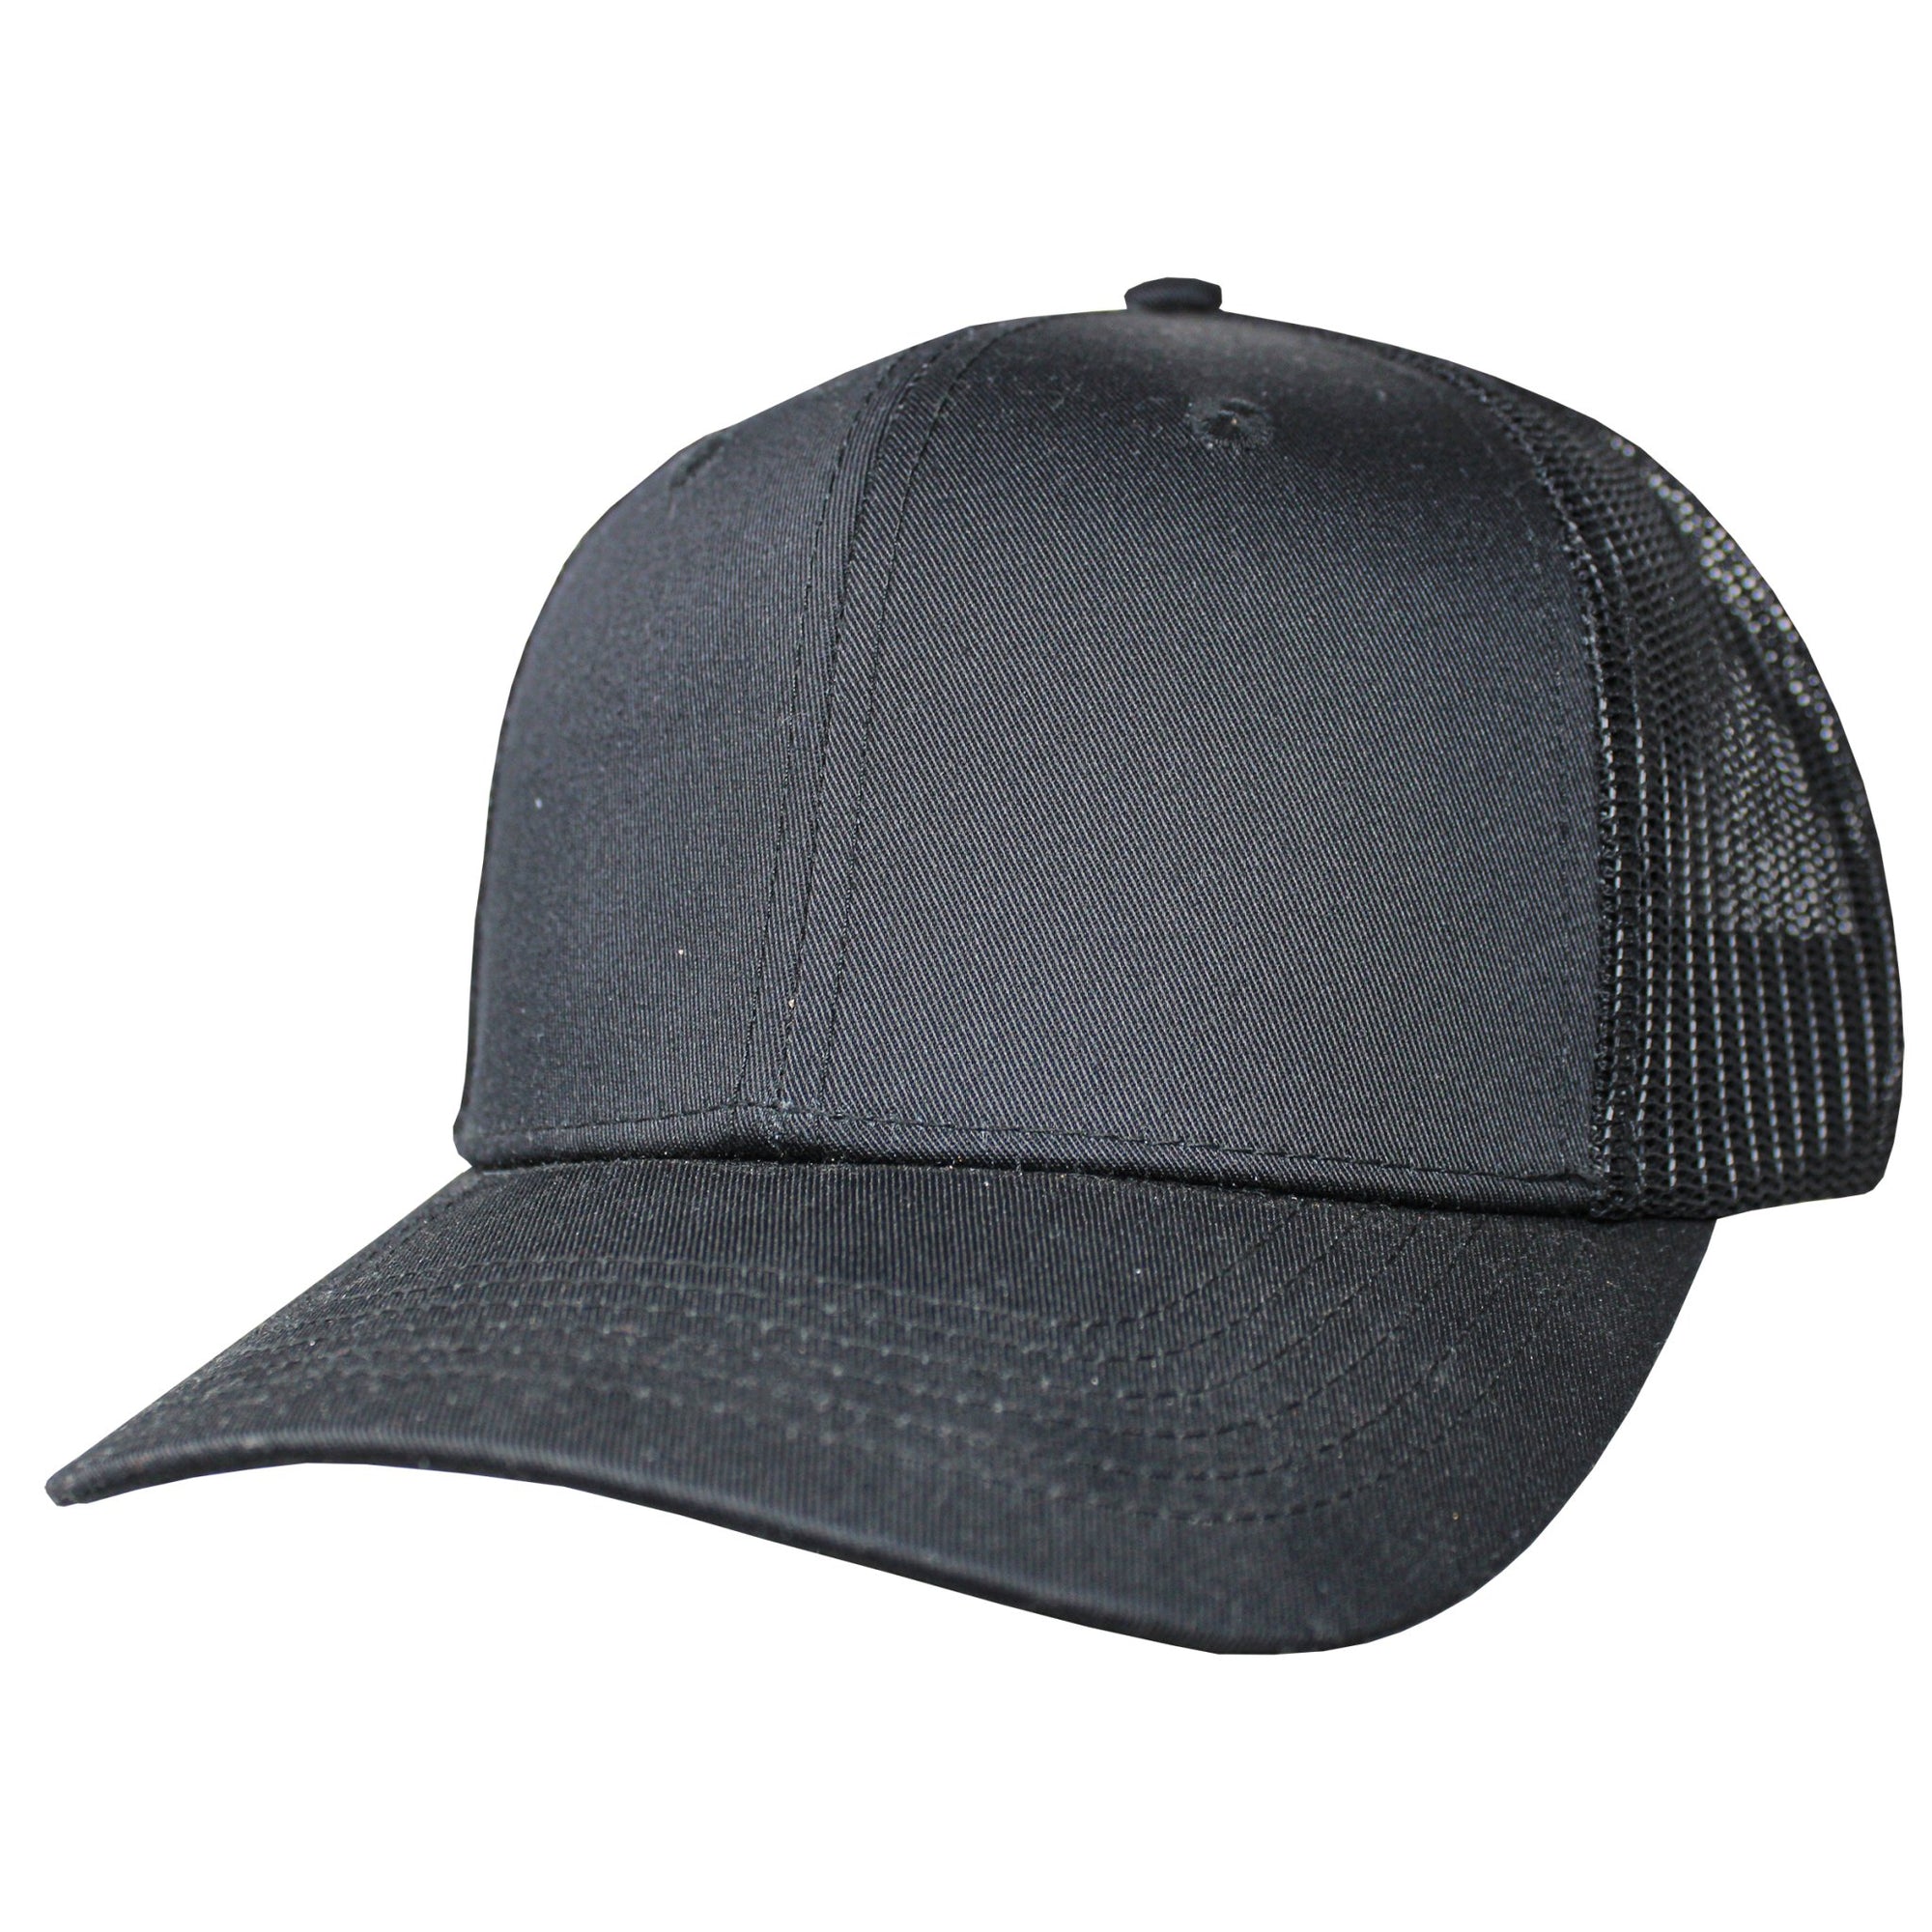 Blank Headwear - BC23 / 6 Panel Performance Trucker Cap - Black/Black - Black Cat MFG - Hat